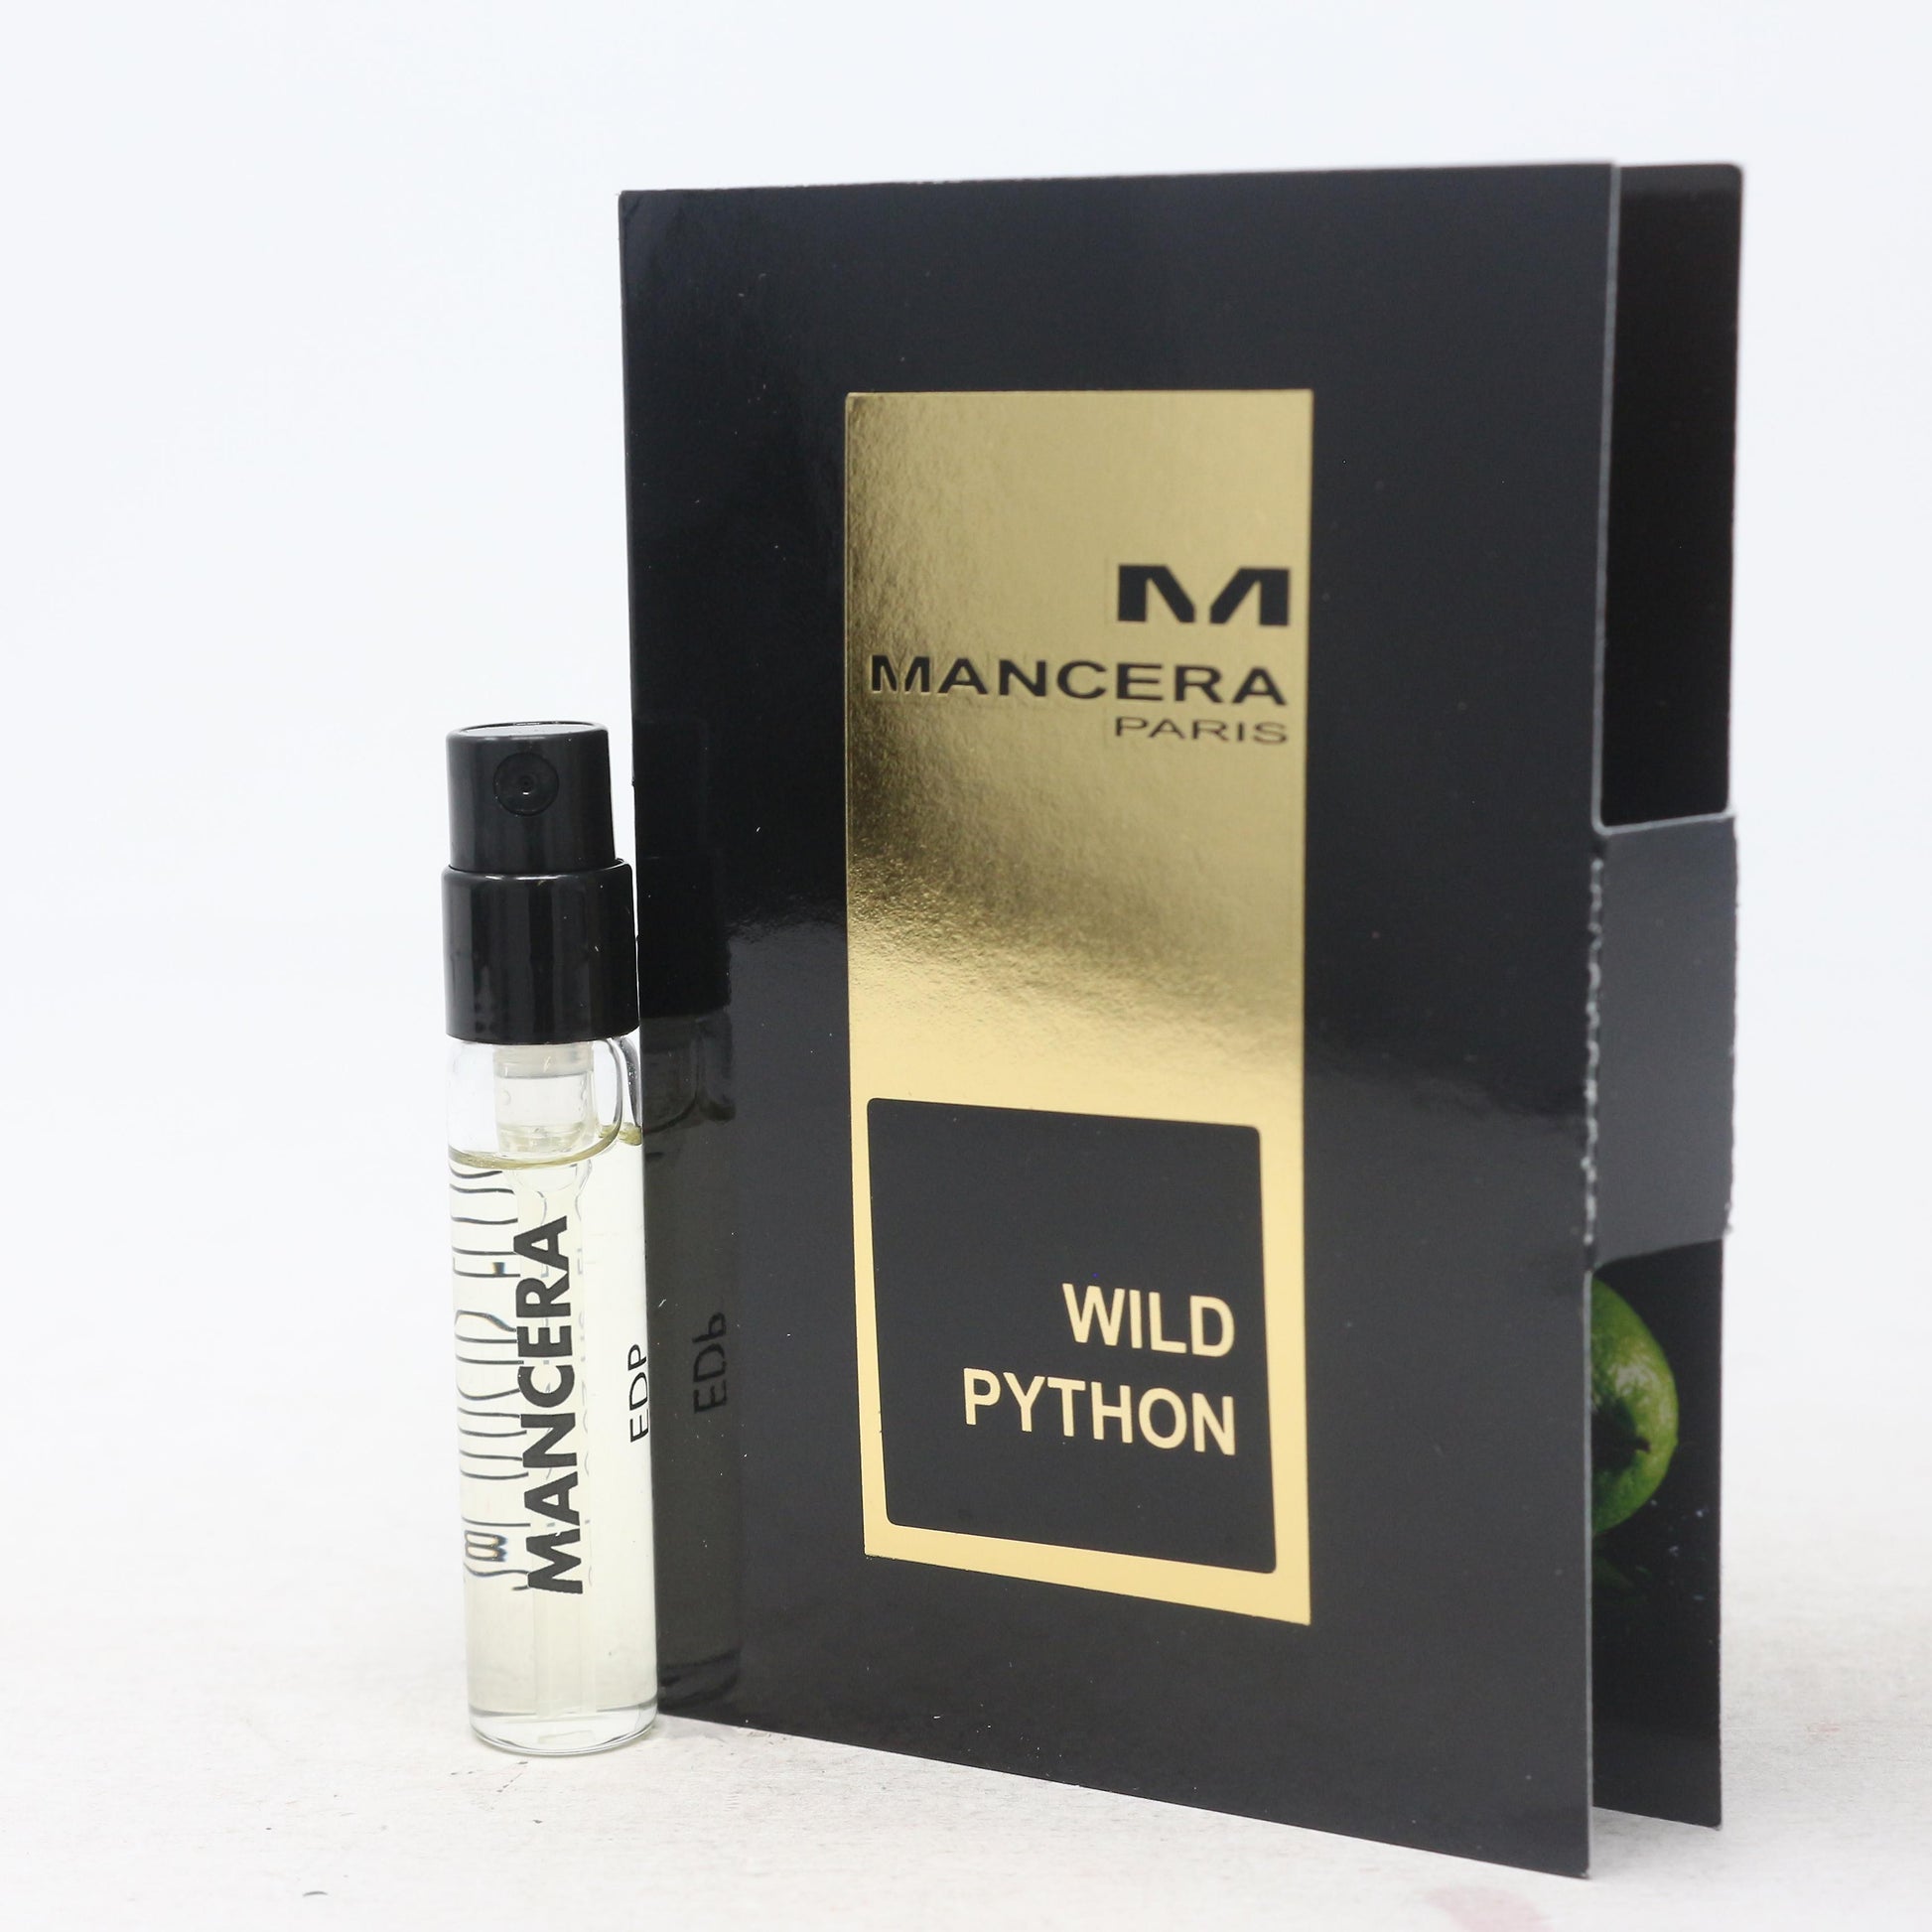 Mancera Wild Python officiellt prov 2ml 0.07 fl.oz.